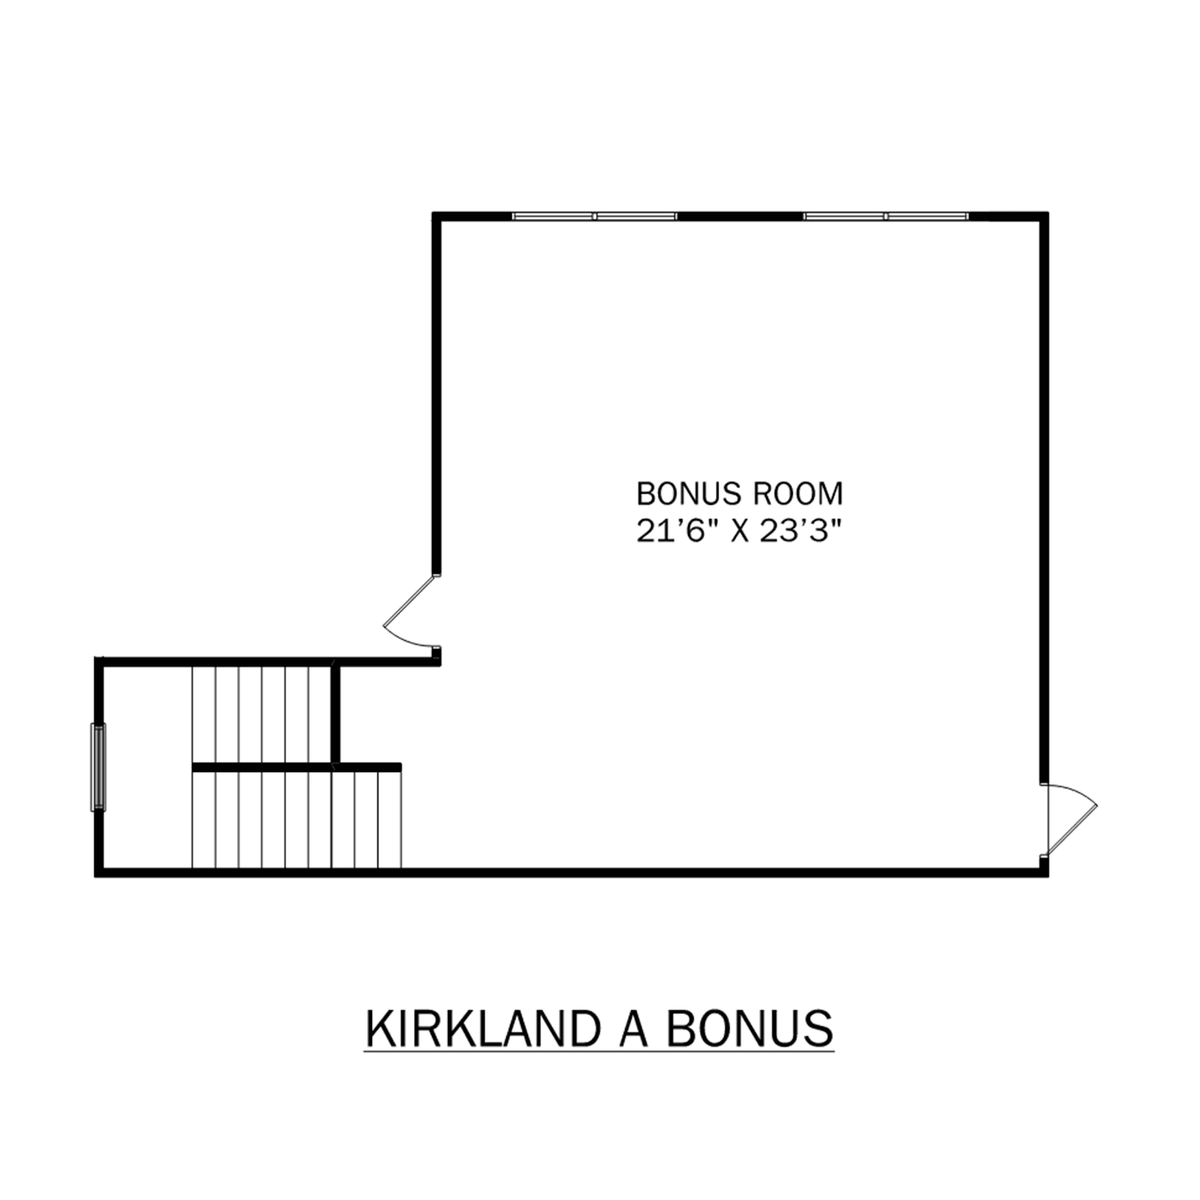 2 - The Kirkland with Bonus buildable floor plan layout in Davidson Homes' River Road Estates community.